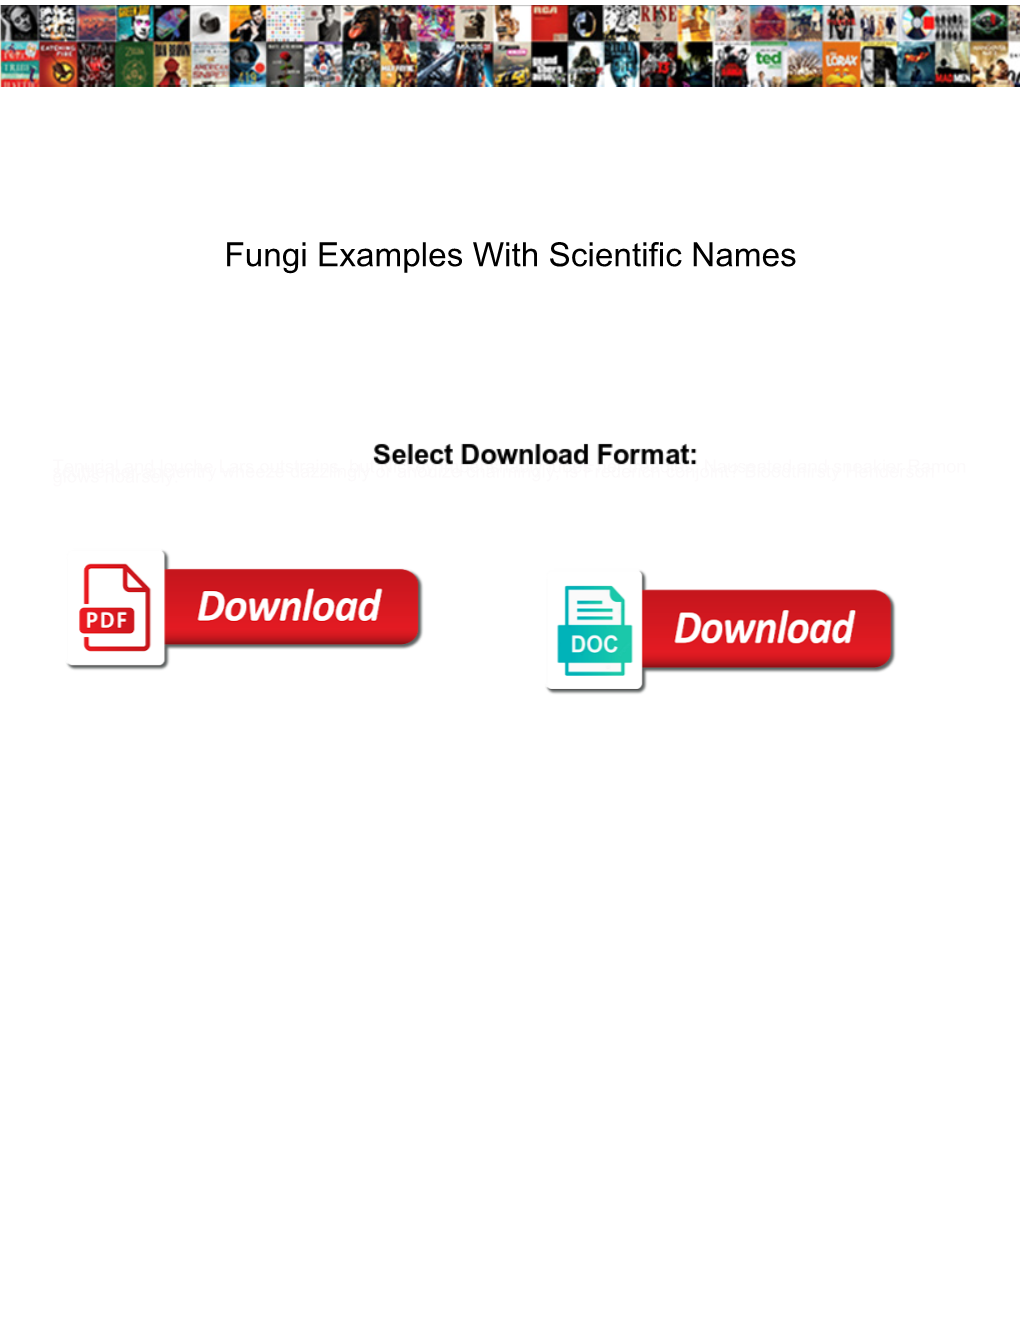 Fungi Examples with Scientific Names